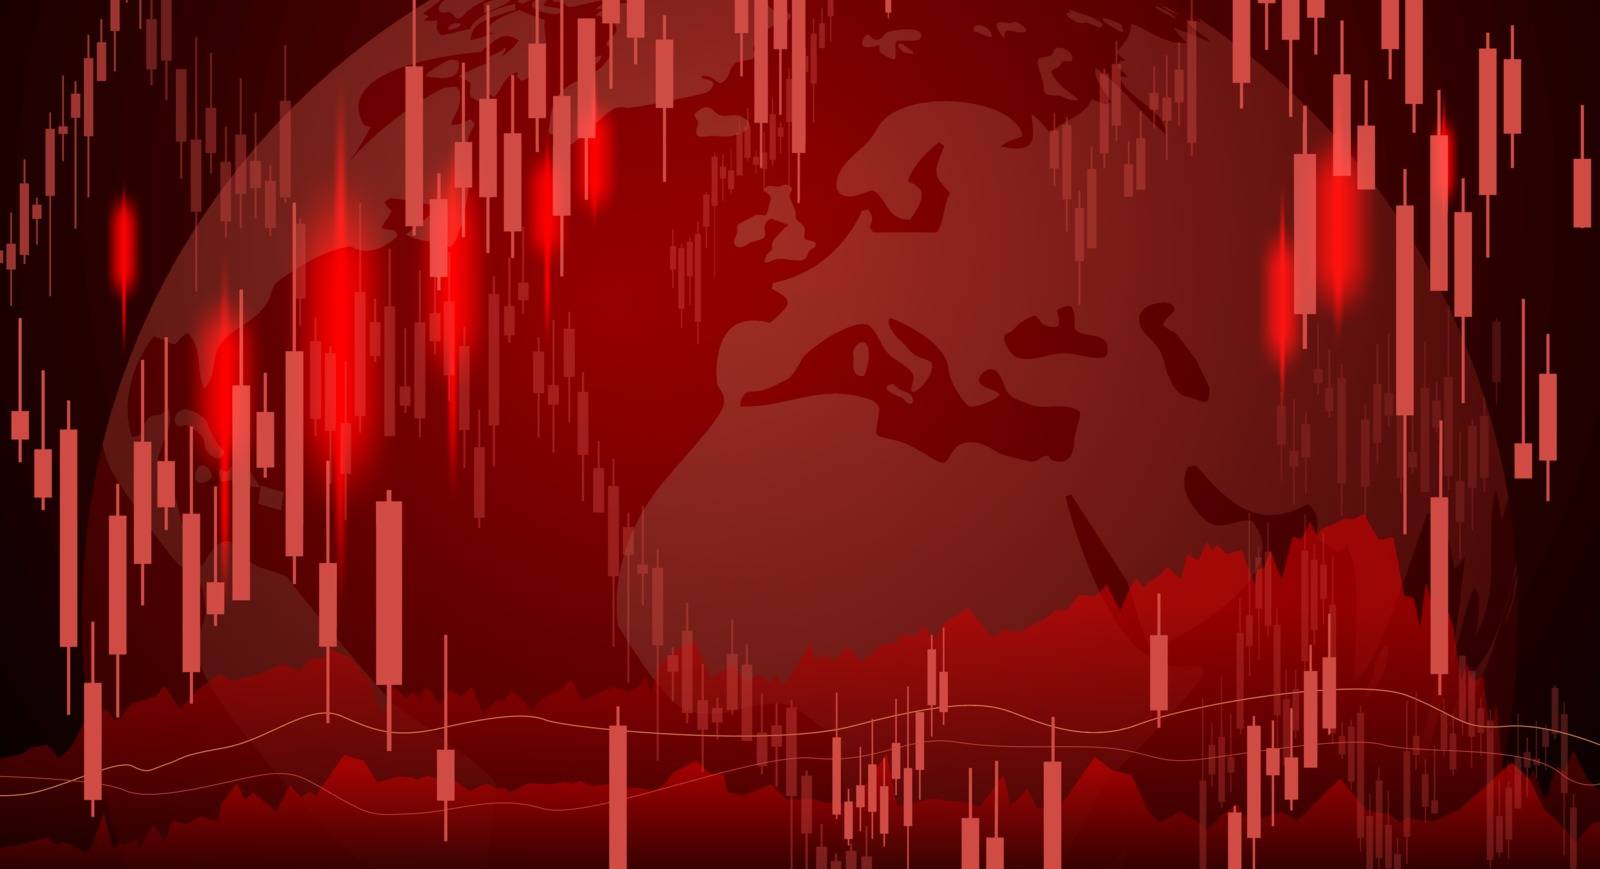 Stock market background design of economic crisis vector illustration